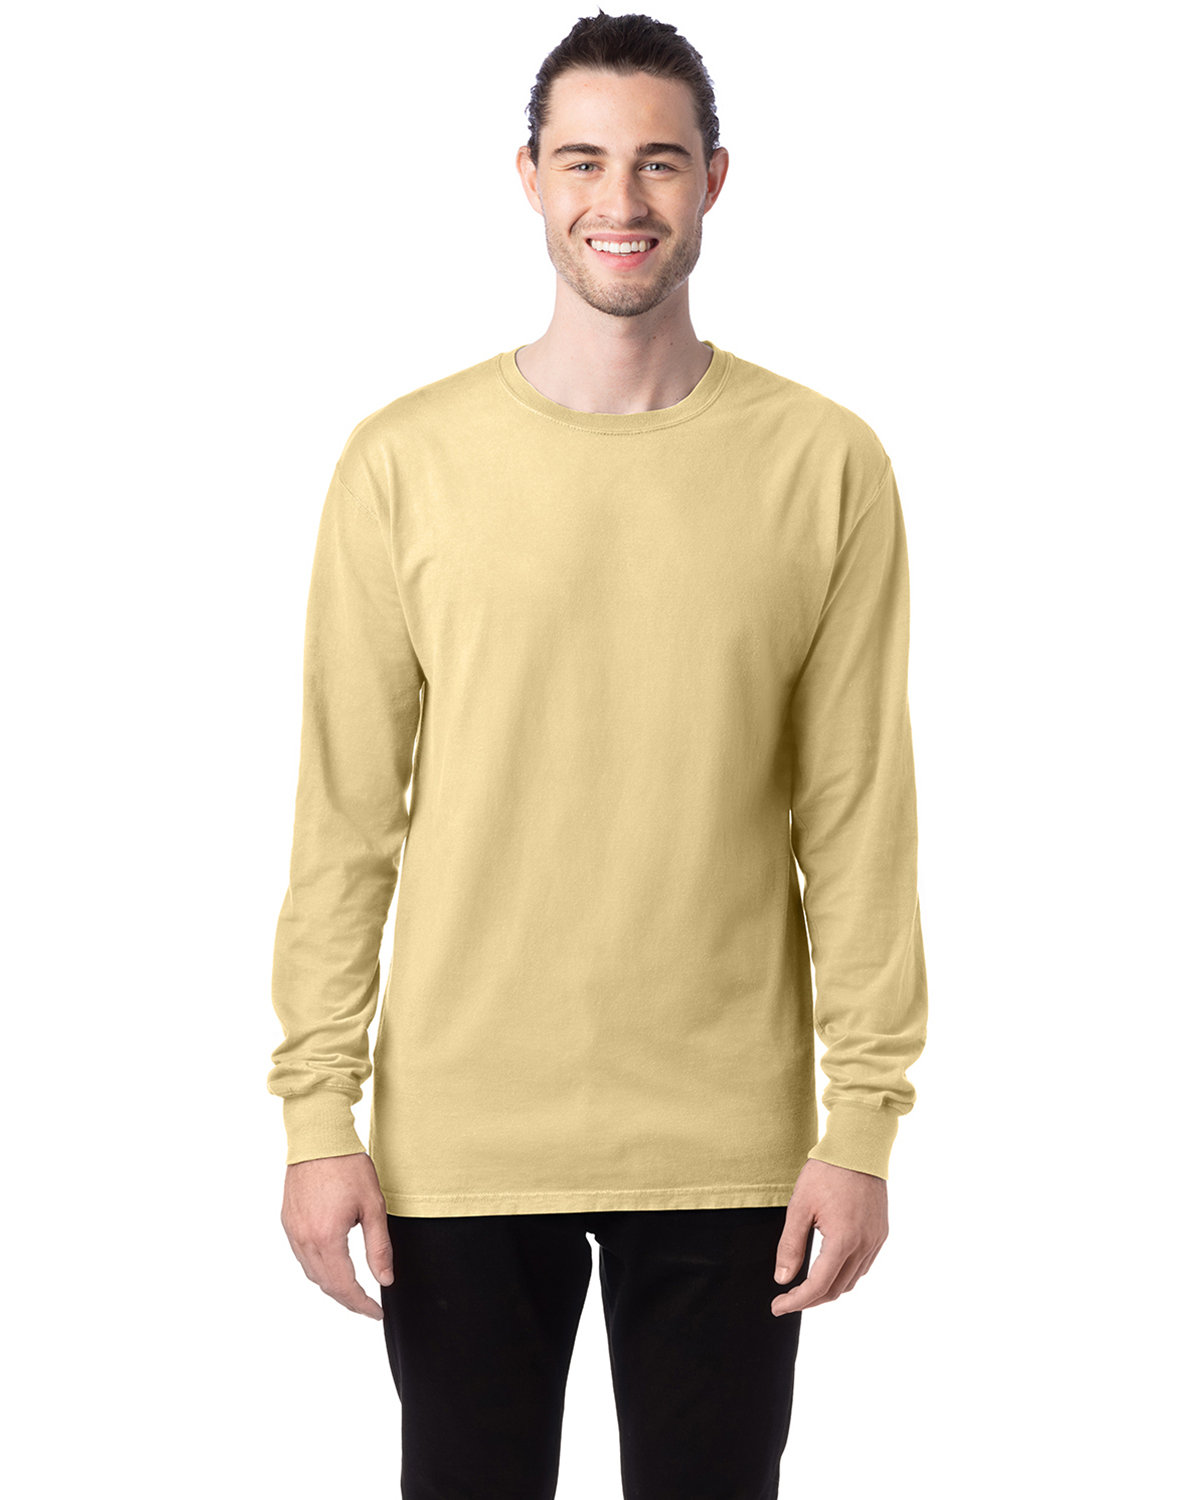 ComfortWash by Hanes Unisex Garment-Dyed Long-Sleeve T-Shirt SUMMER SQSH YLW 